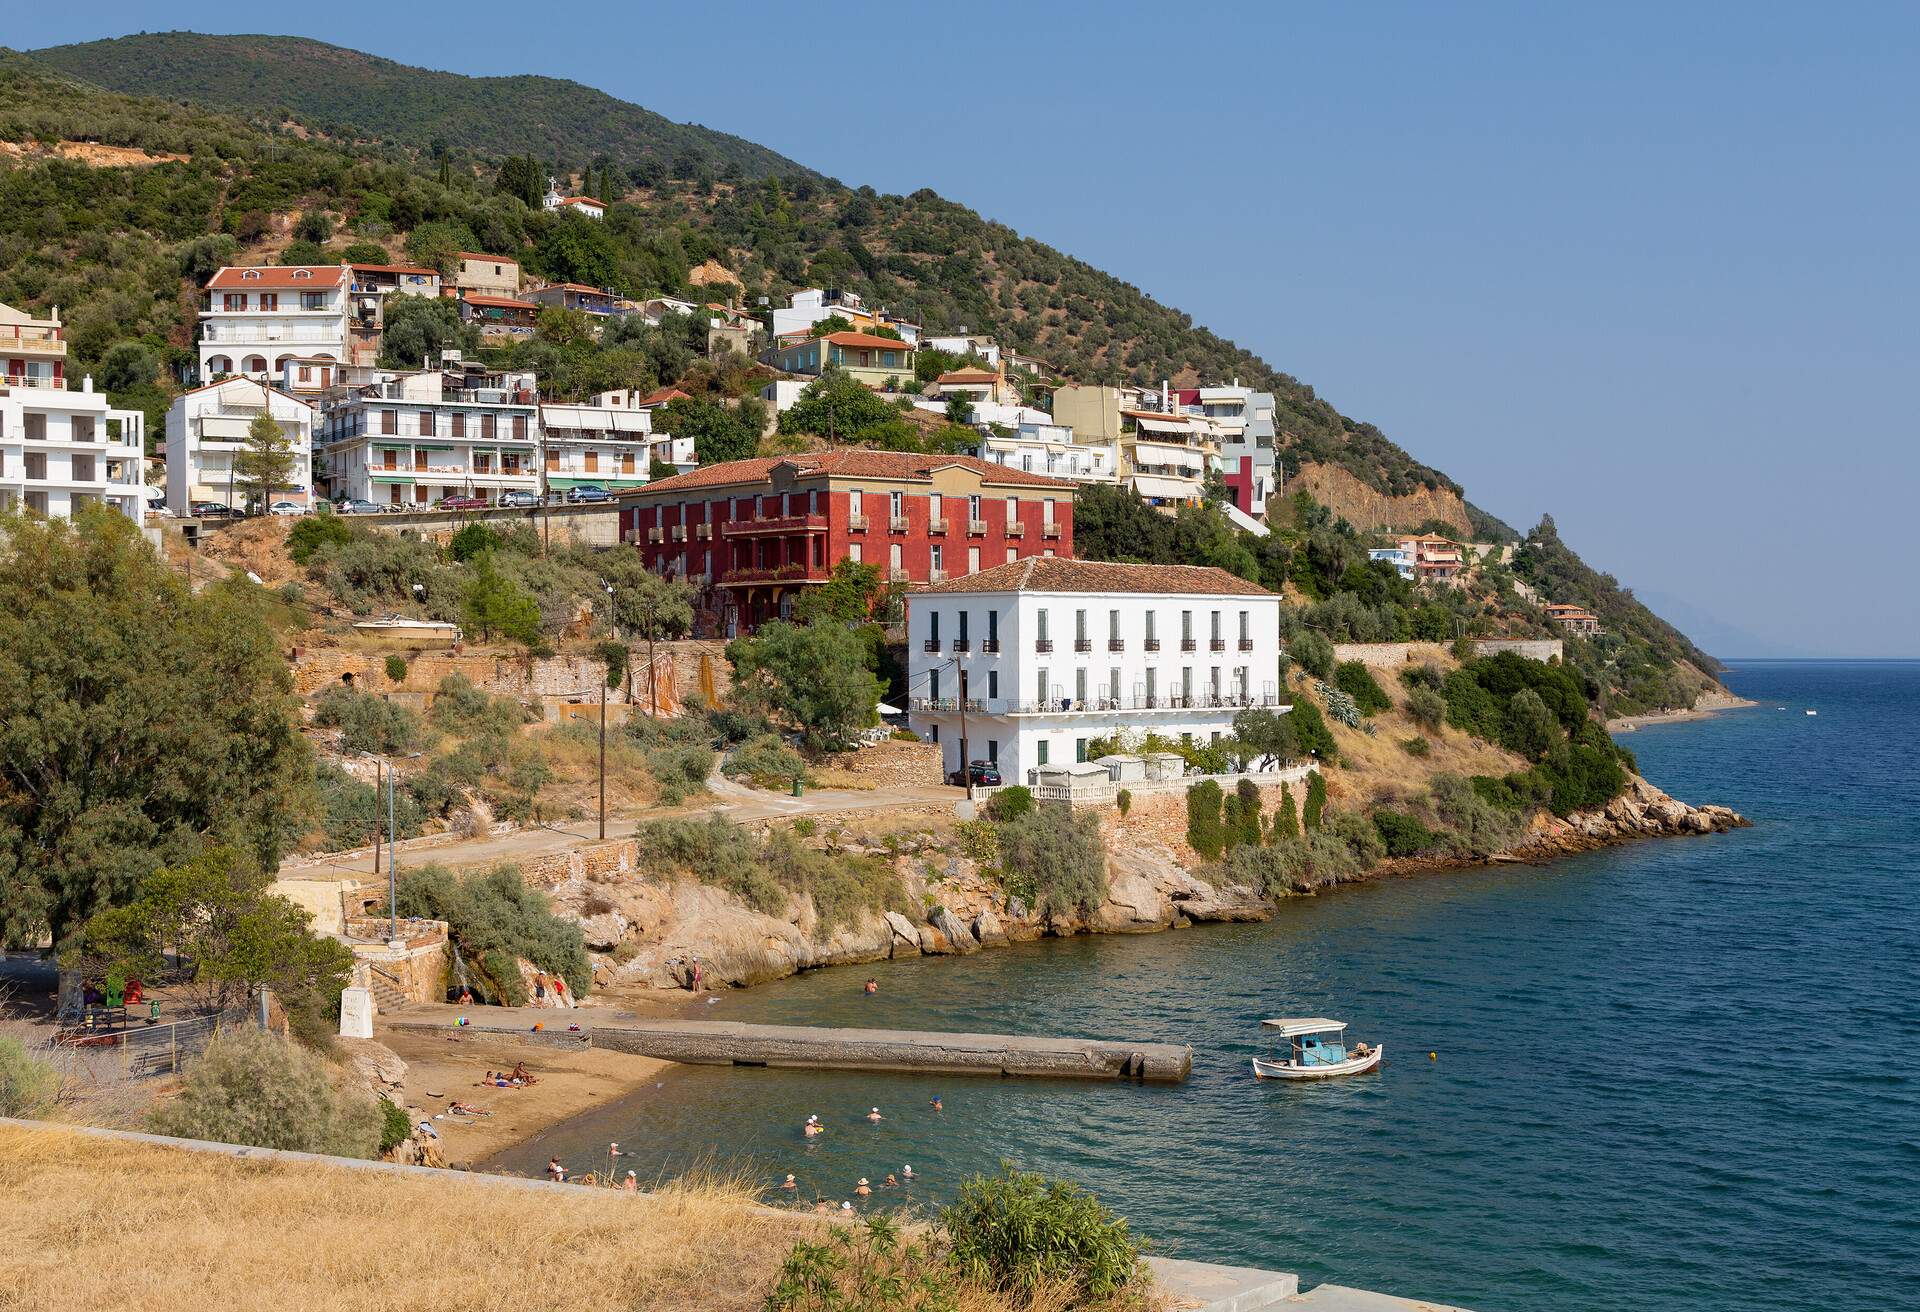 Loutra Edipsou, North Euboea, Greece; Shutterstock ID 151829771